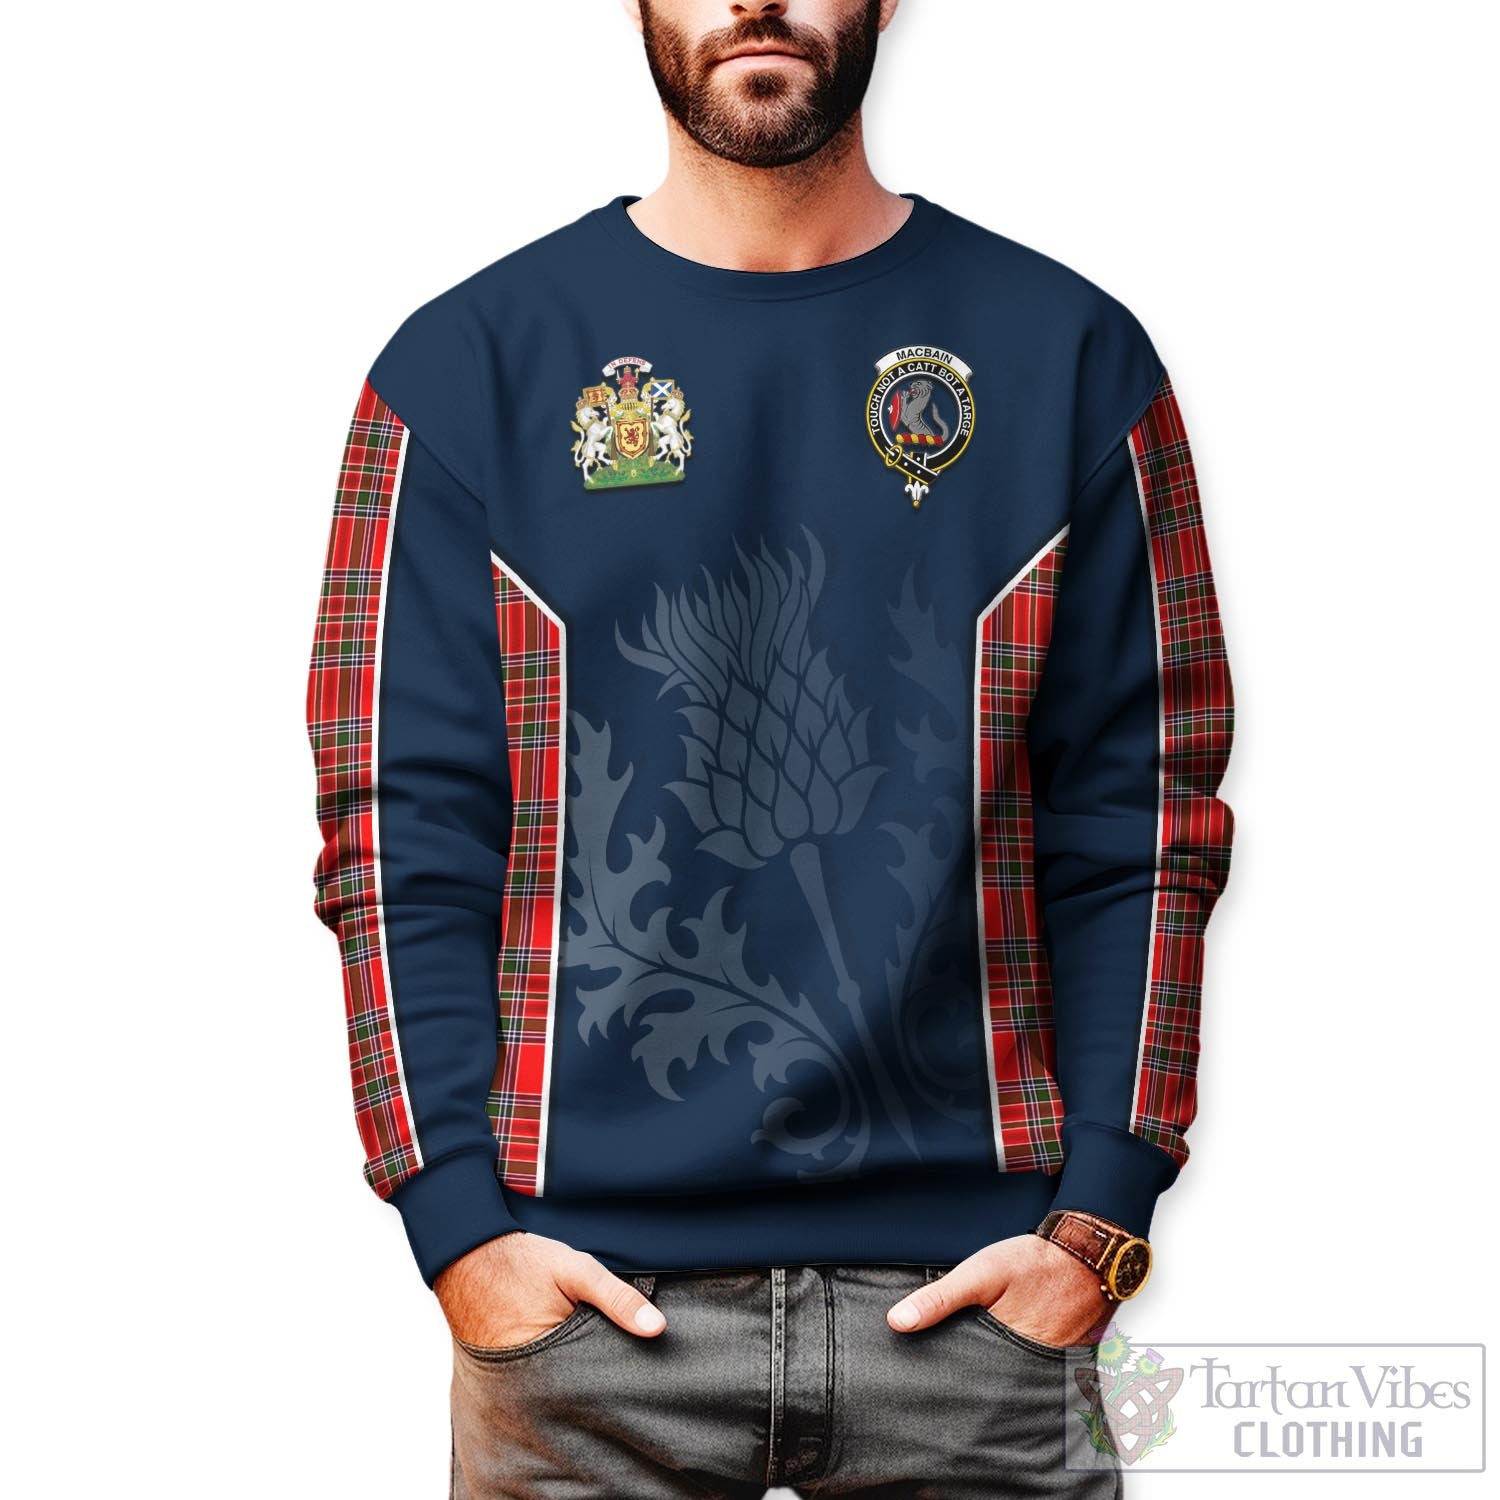 Tartan Vibes Clothing MacBain Tartan Sweatshirt with Family Crest and Scottish Thistle Vibes Sport Style